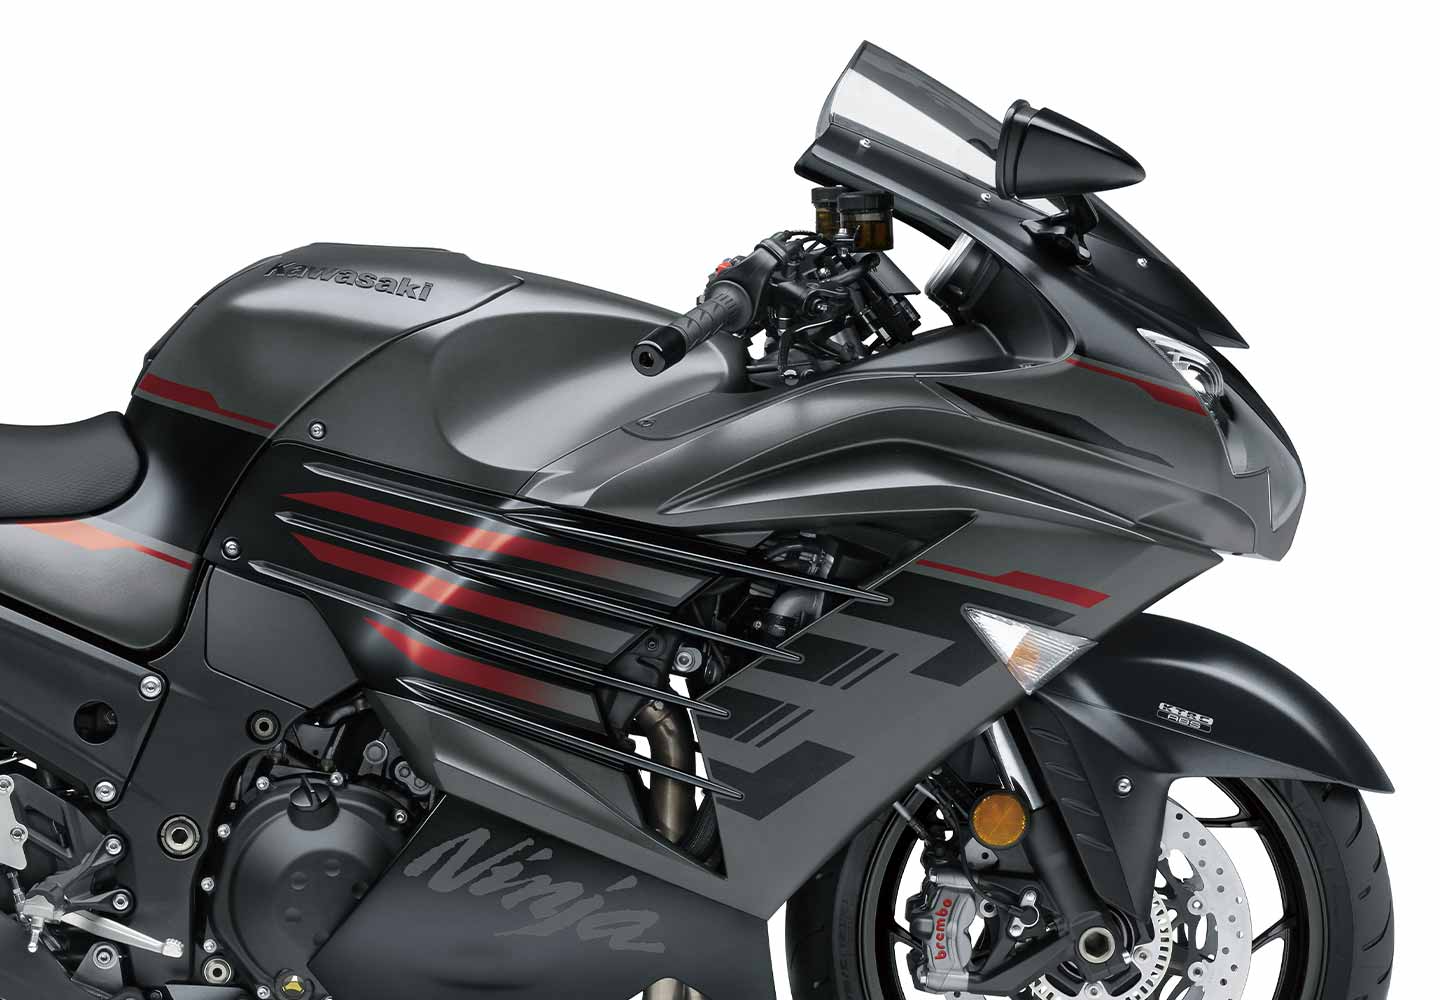 Kawasaki Ninja ZX-14R | Supersport Motorcycle | Innovative Power